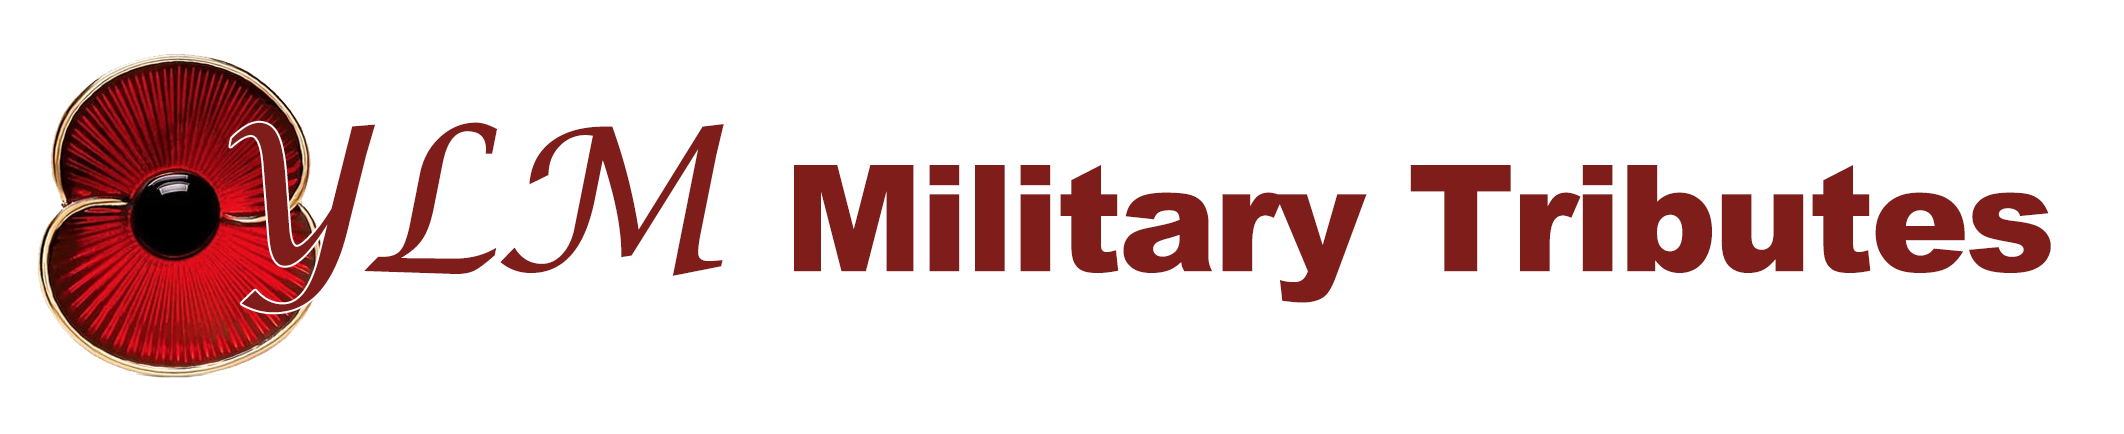 ylm-military-logo